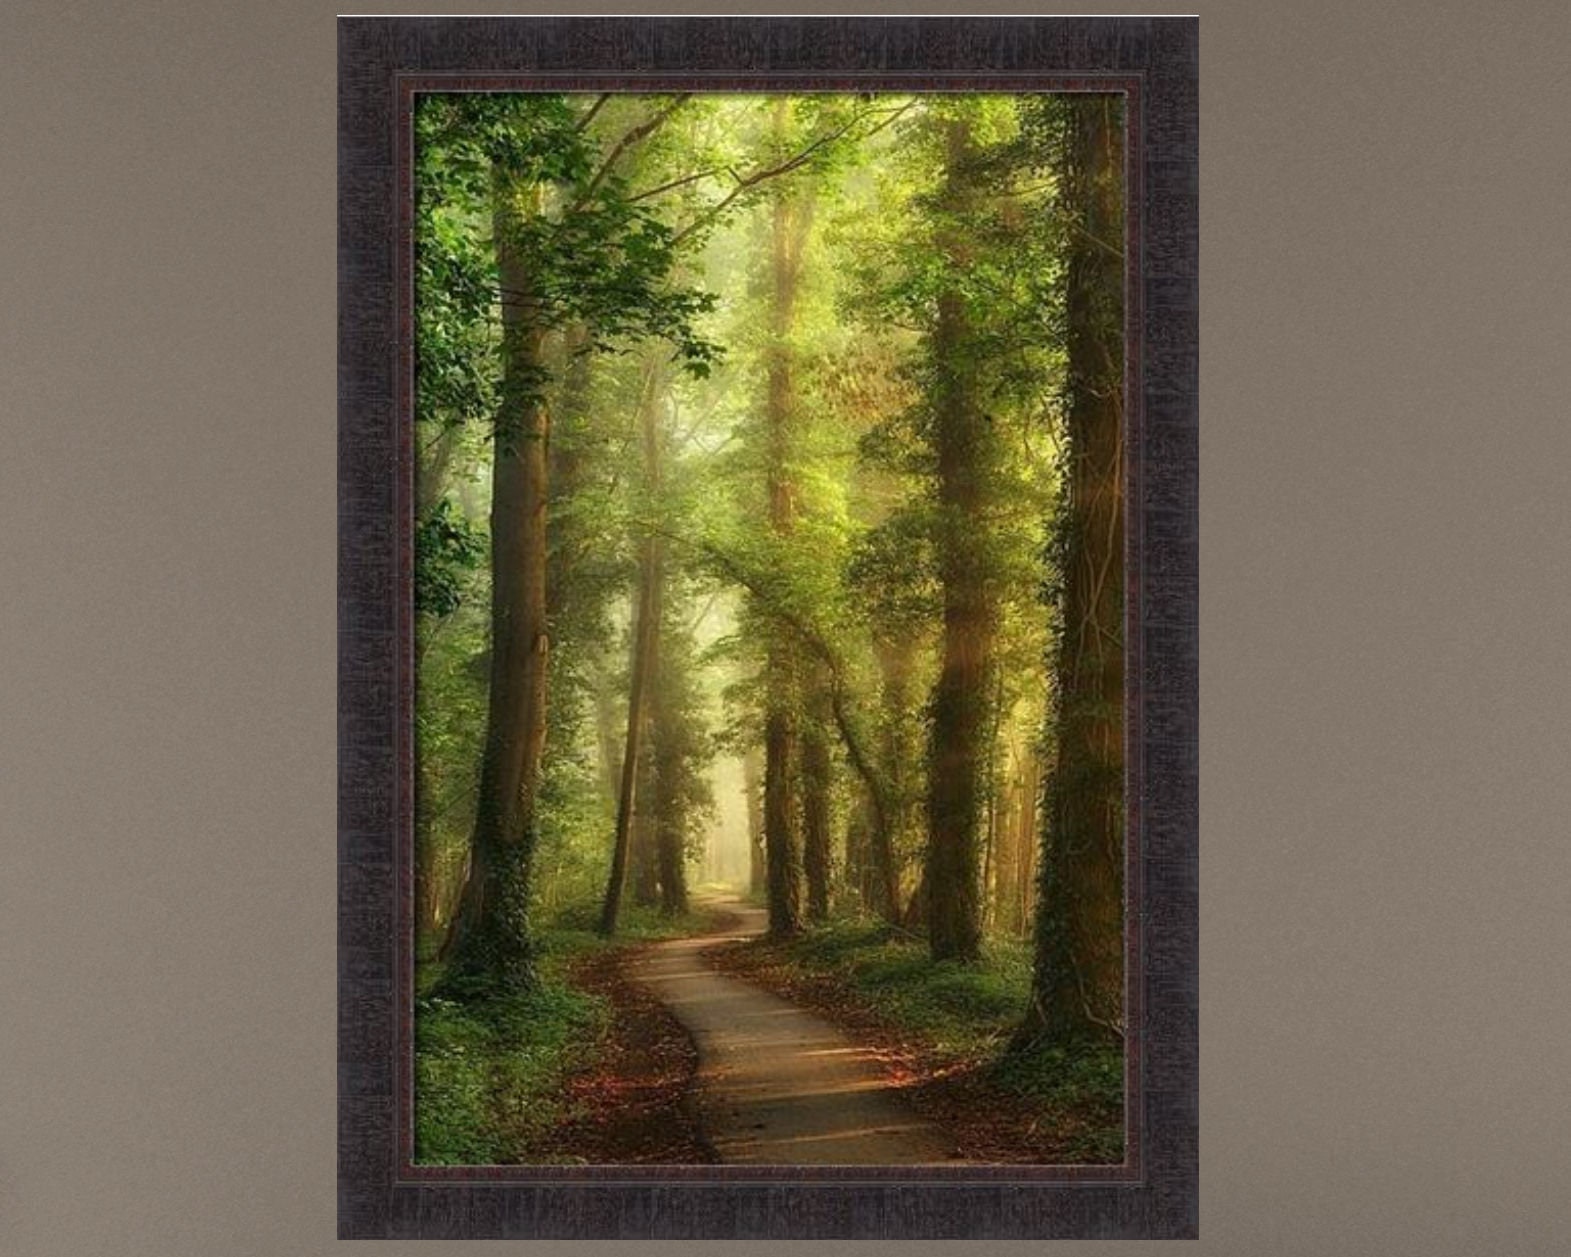 Cuadro numerado para pintar Walk in the Forest - Wooden Path Among